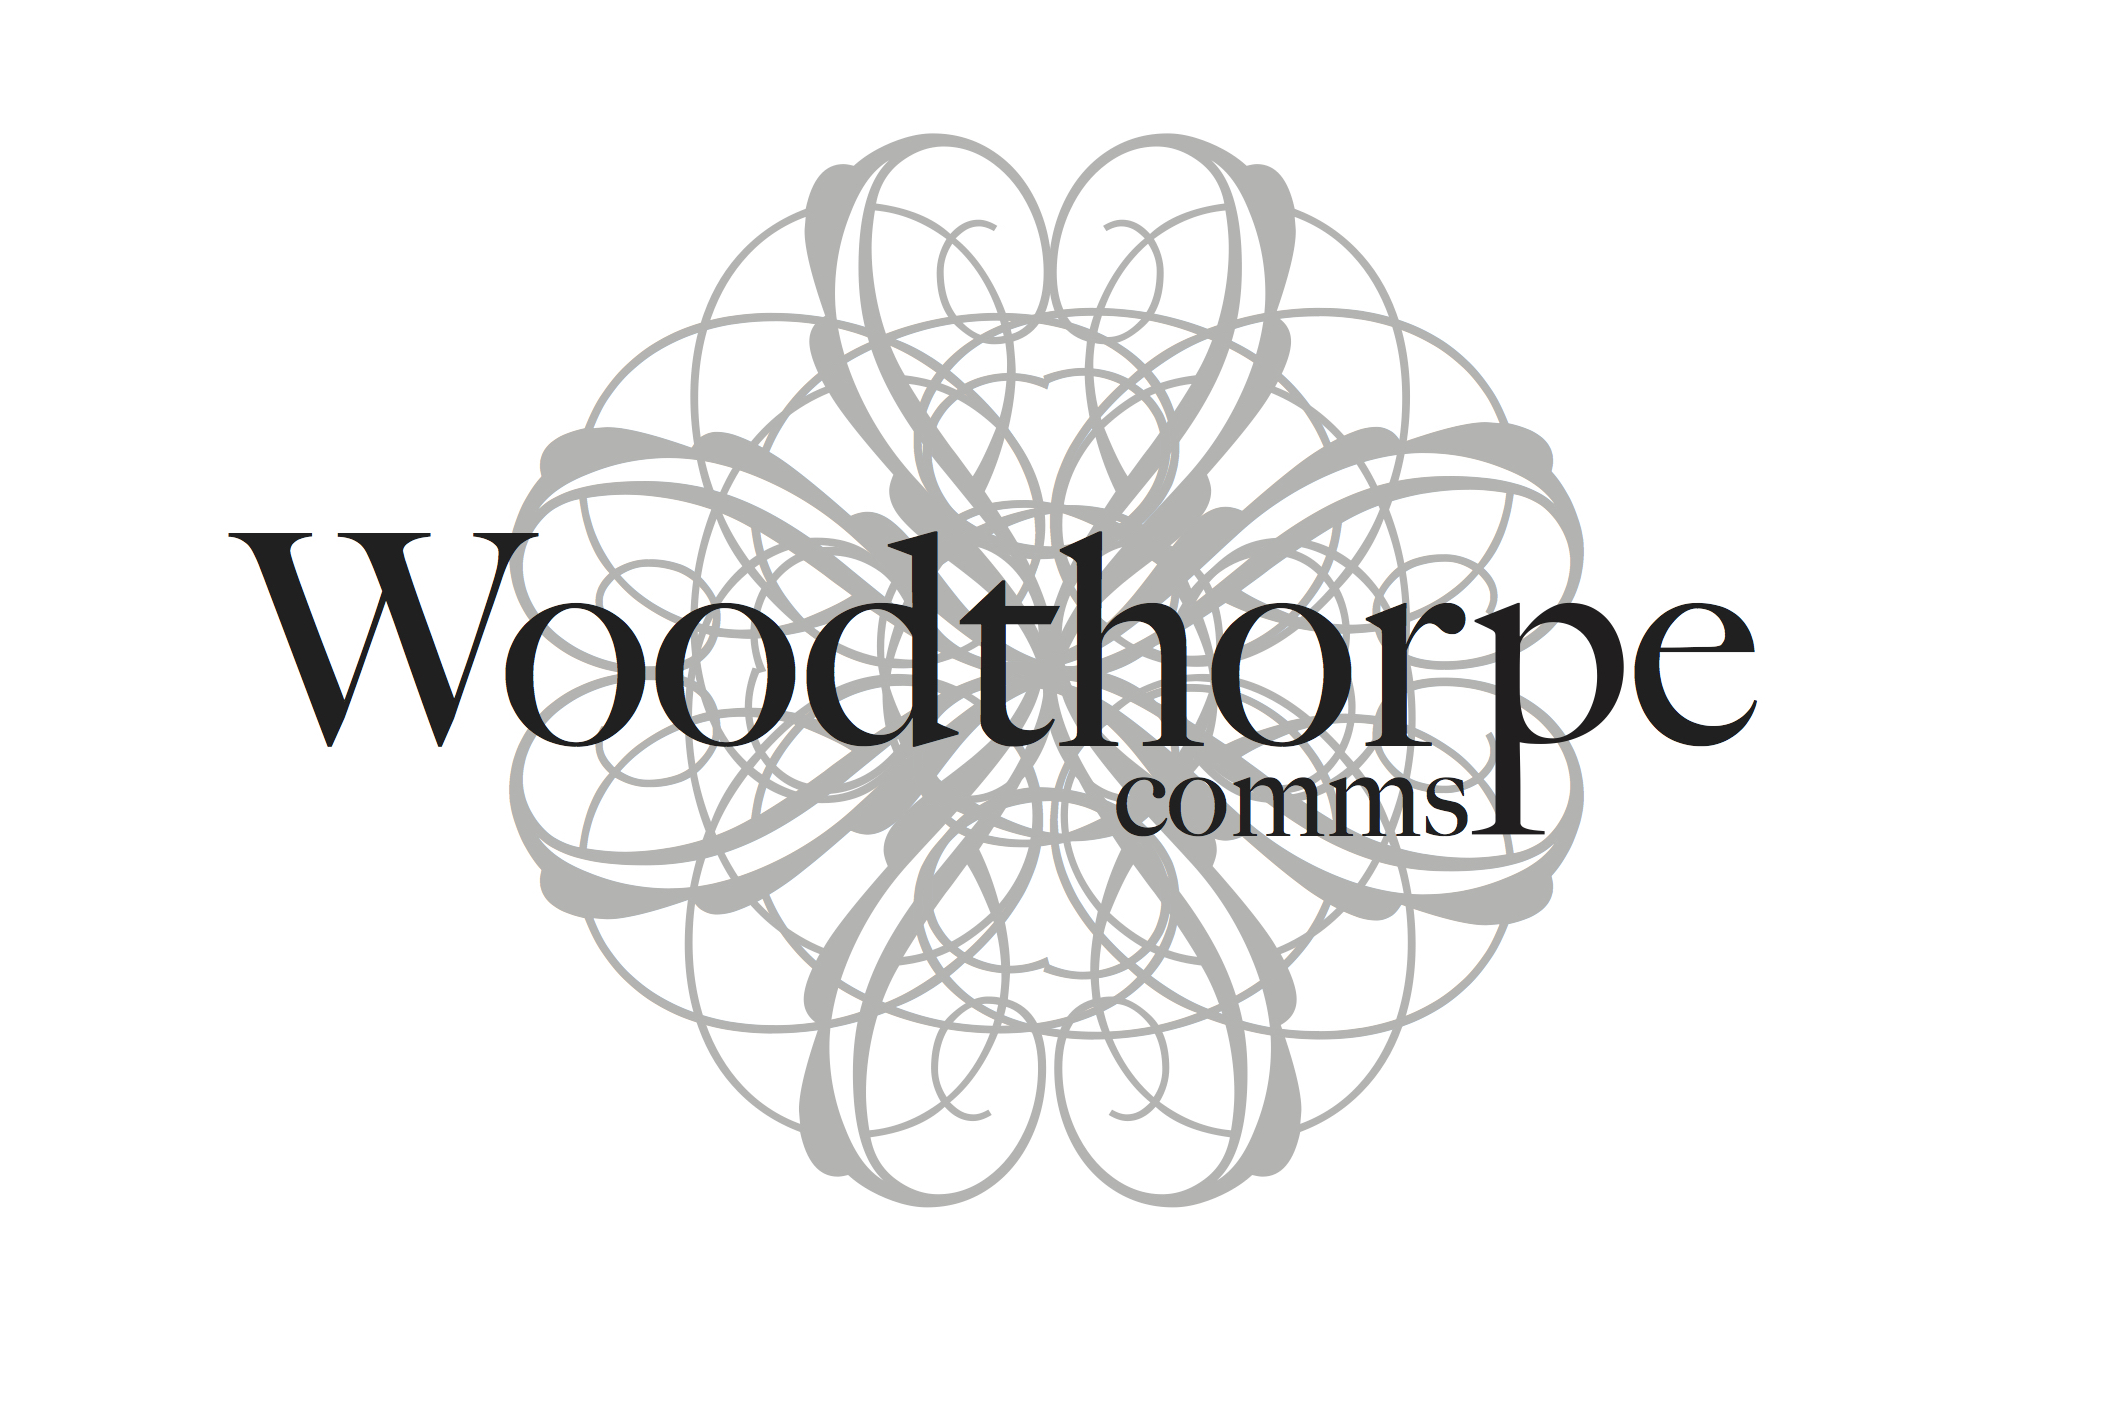 Woodthorpe comms